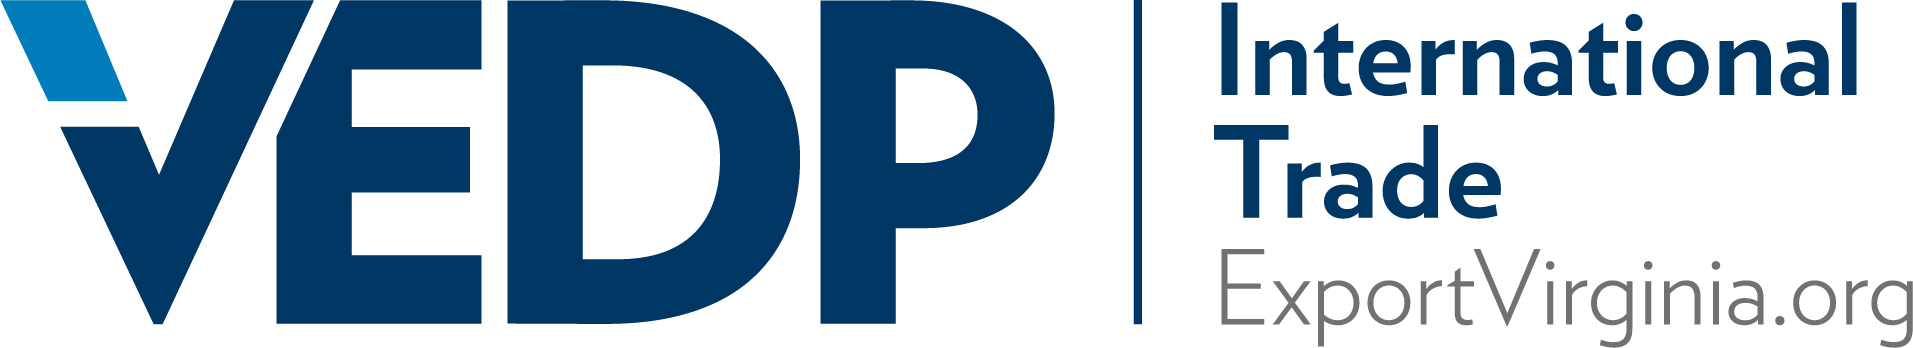 VEDP Export Virginia International Trade company logo